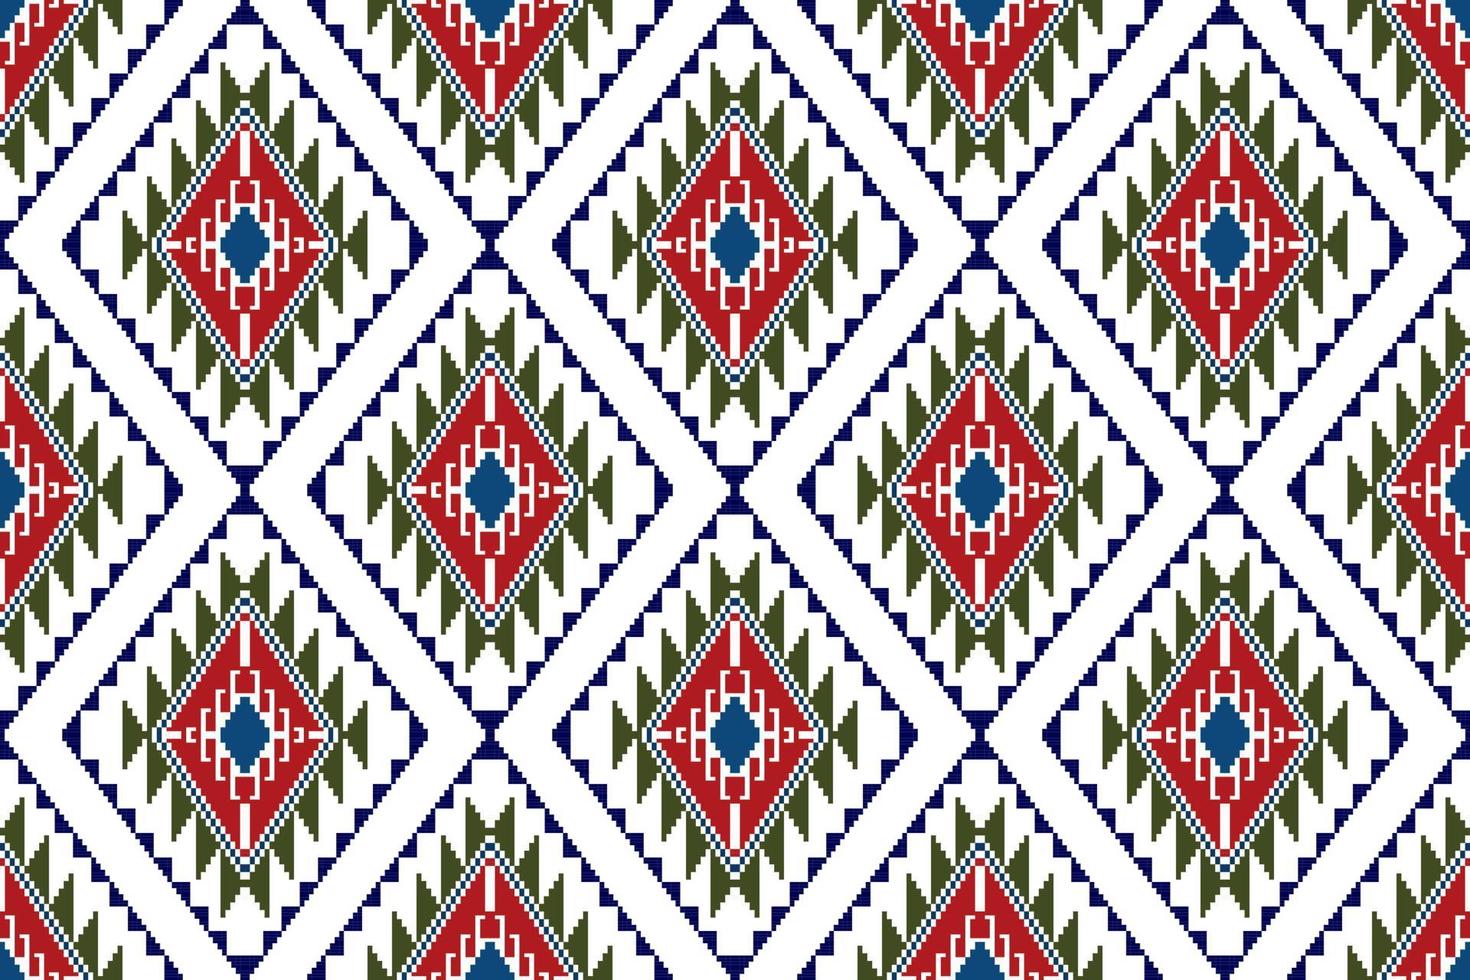 tartreez palestinsk abstrakt geometrisk etnisk textil mönsterdesign. Aztec tyg matta mandala ornament textil dekorationer tapet. tribal boho infödda sömlös textil traditionell broderi vektor